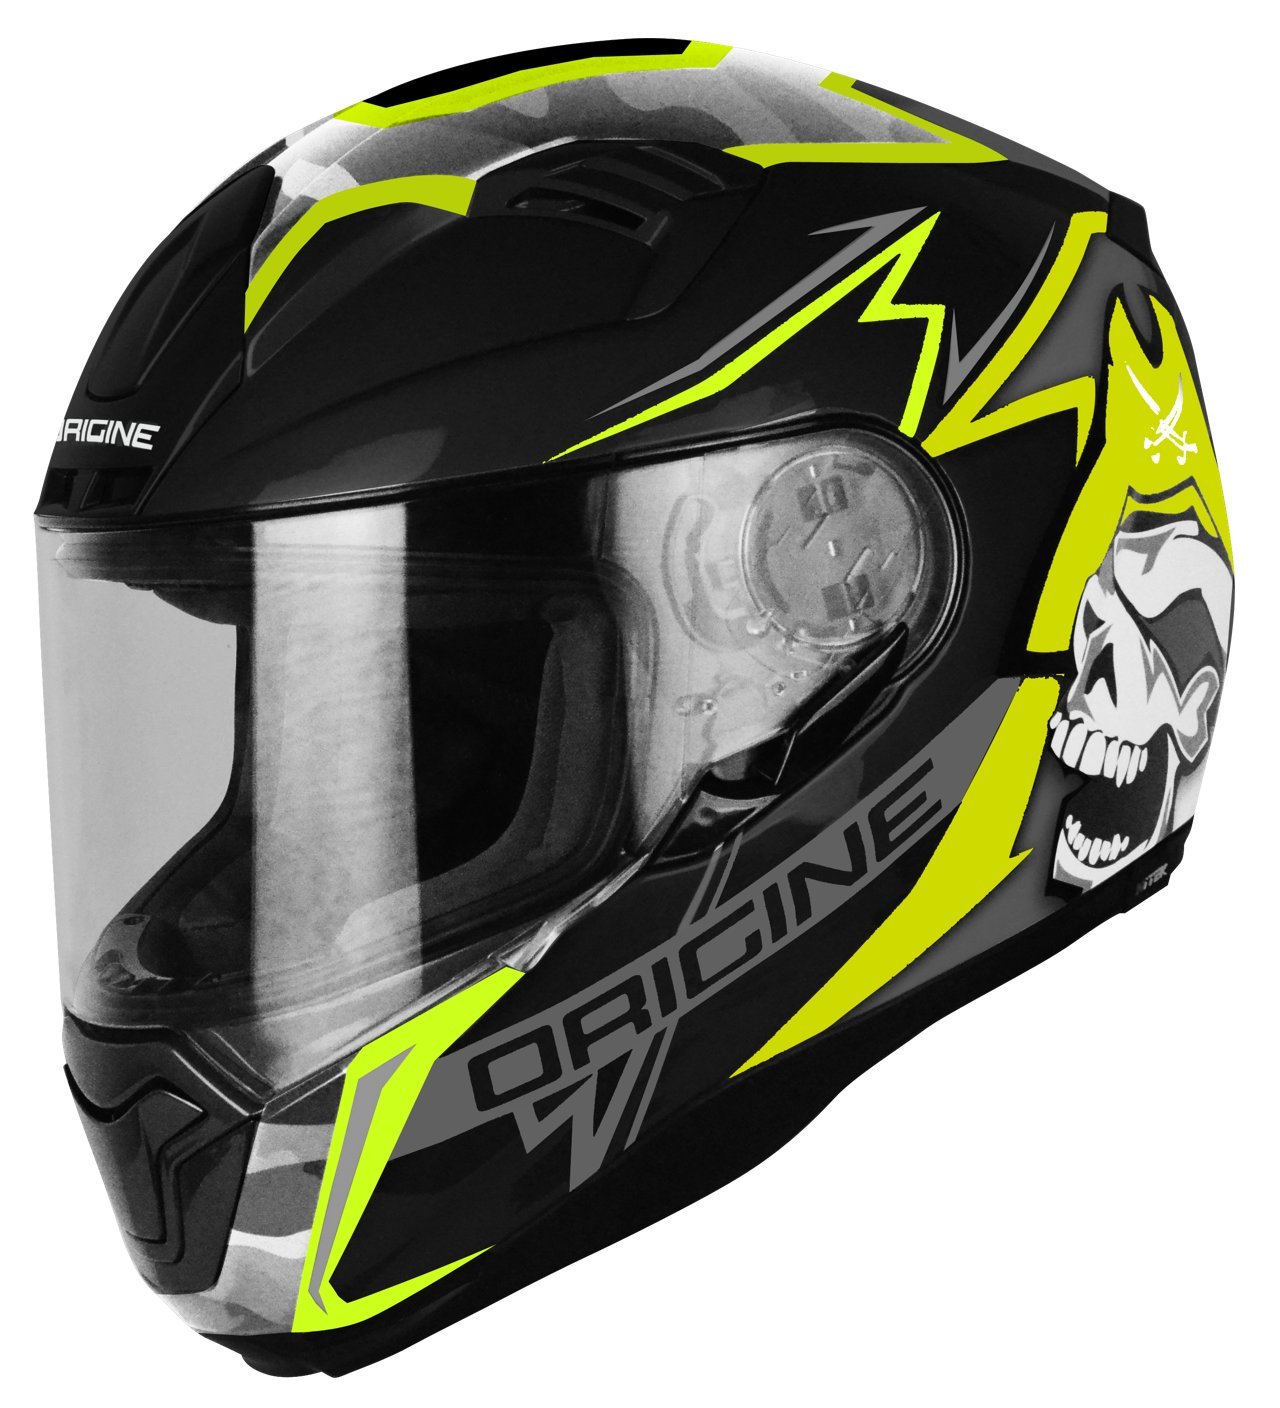 Herkunft Helmets Ursprungs ST Race Lime, Schwarz/Lime, Gr. XL